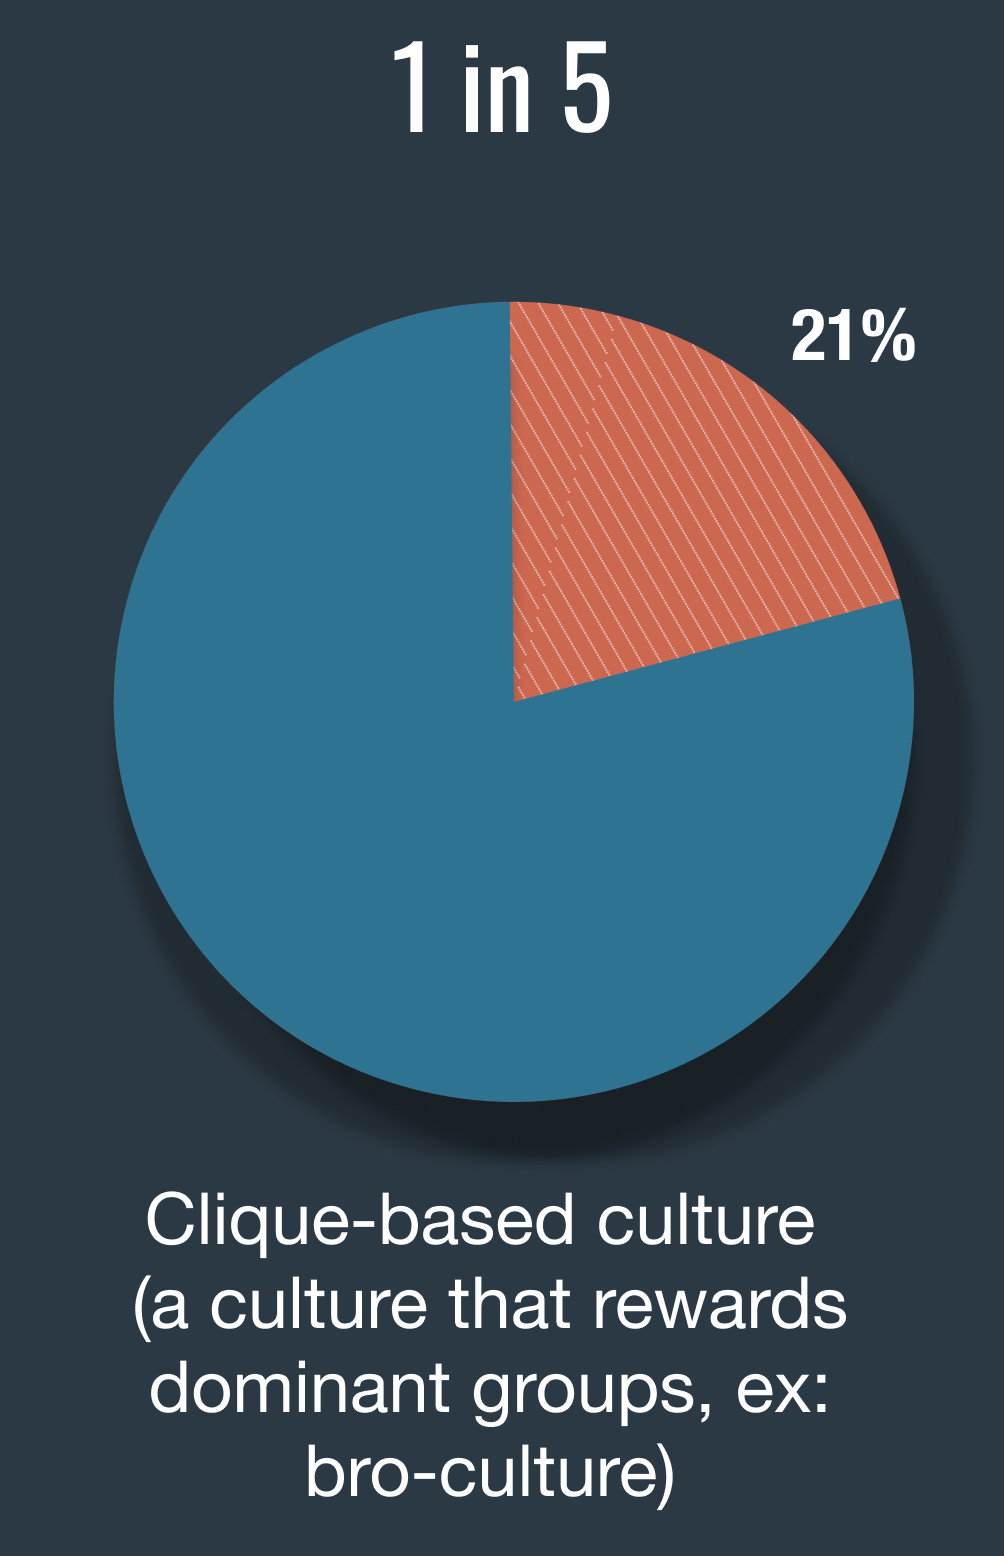 1 in 5 said: Clique-based culture (a culture that rewards dominant groups, ex: bro-culture)